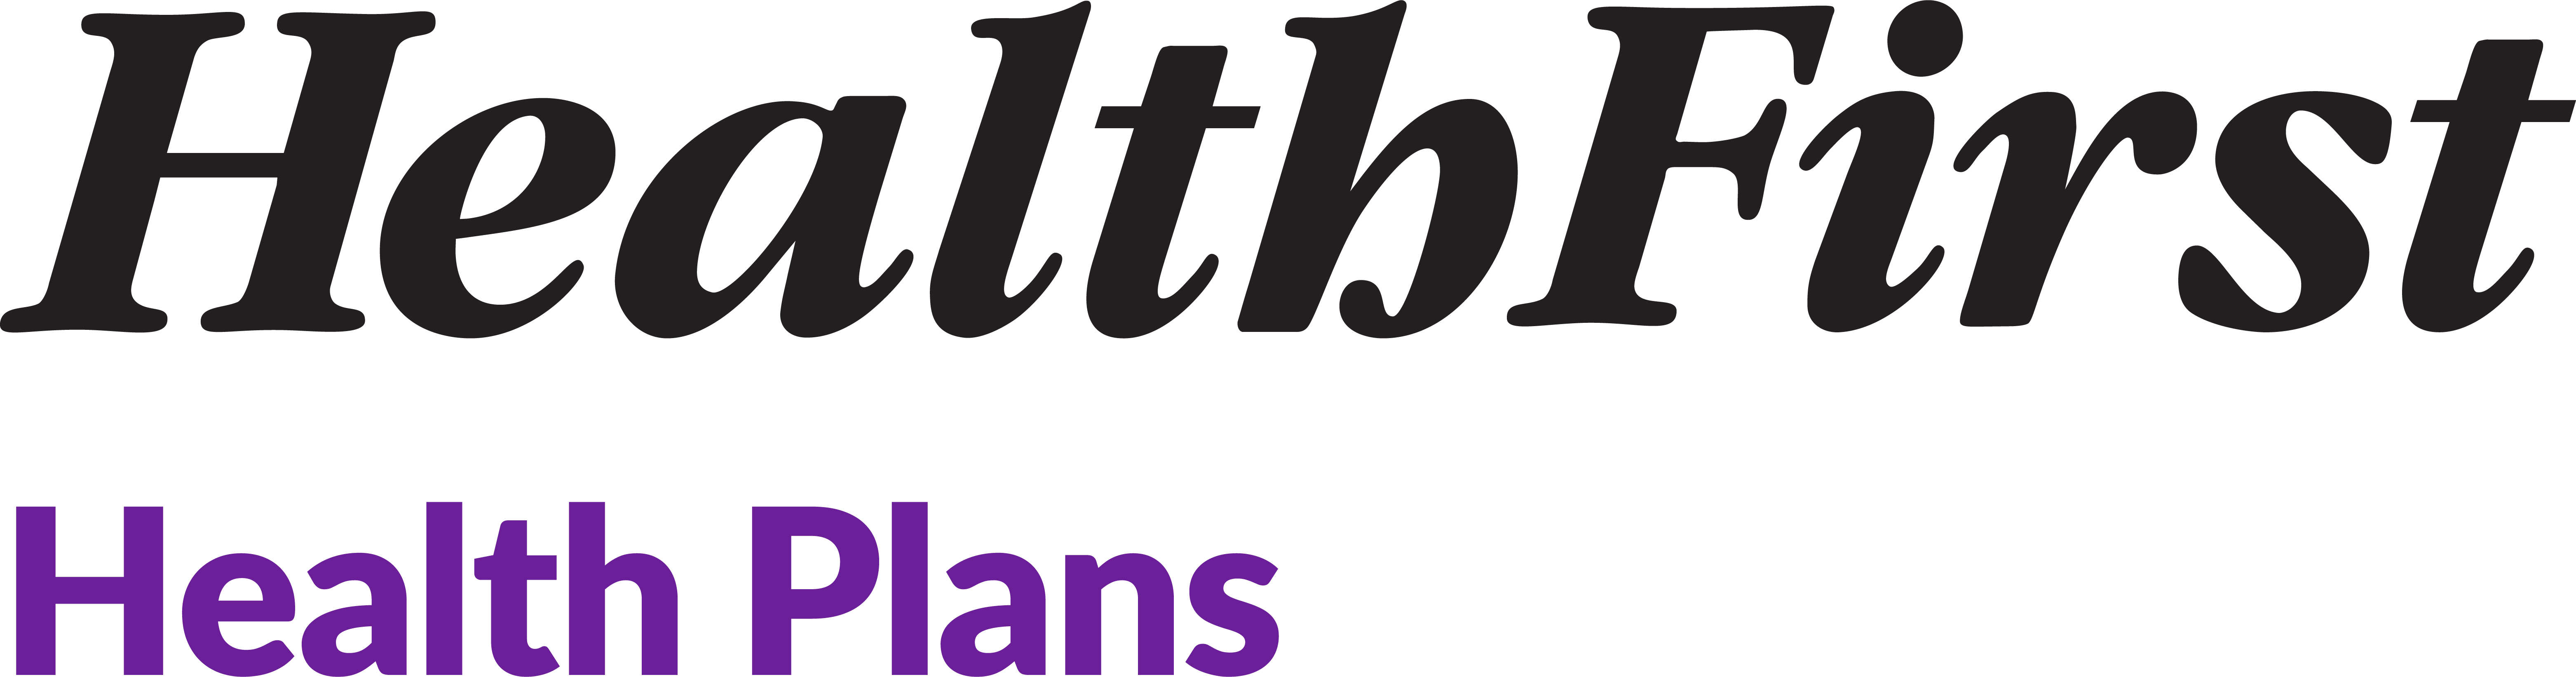 Health First Health Plans (HFHP) logo